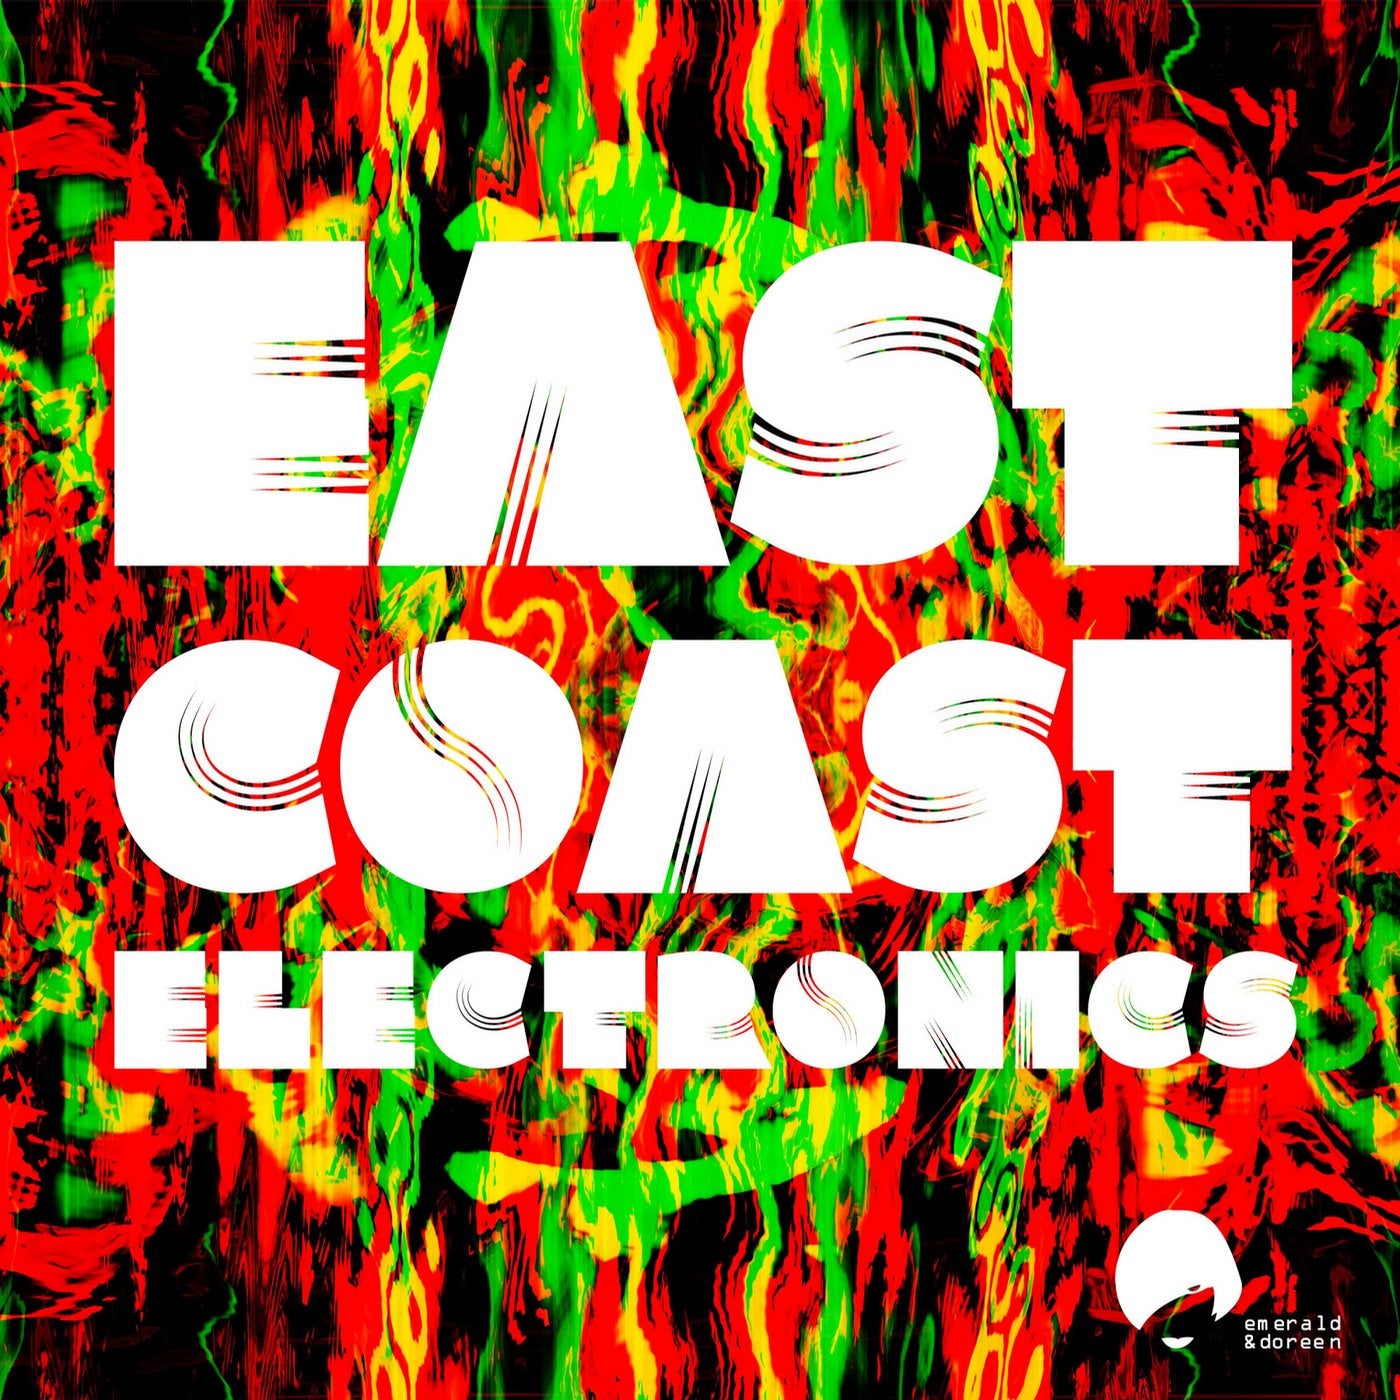 East Coast Electronics